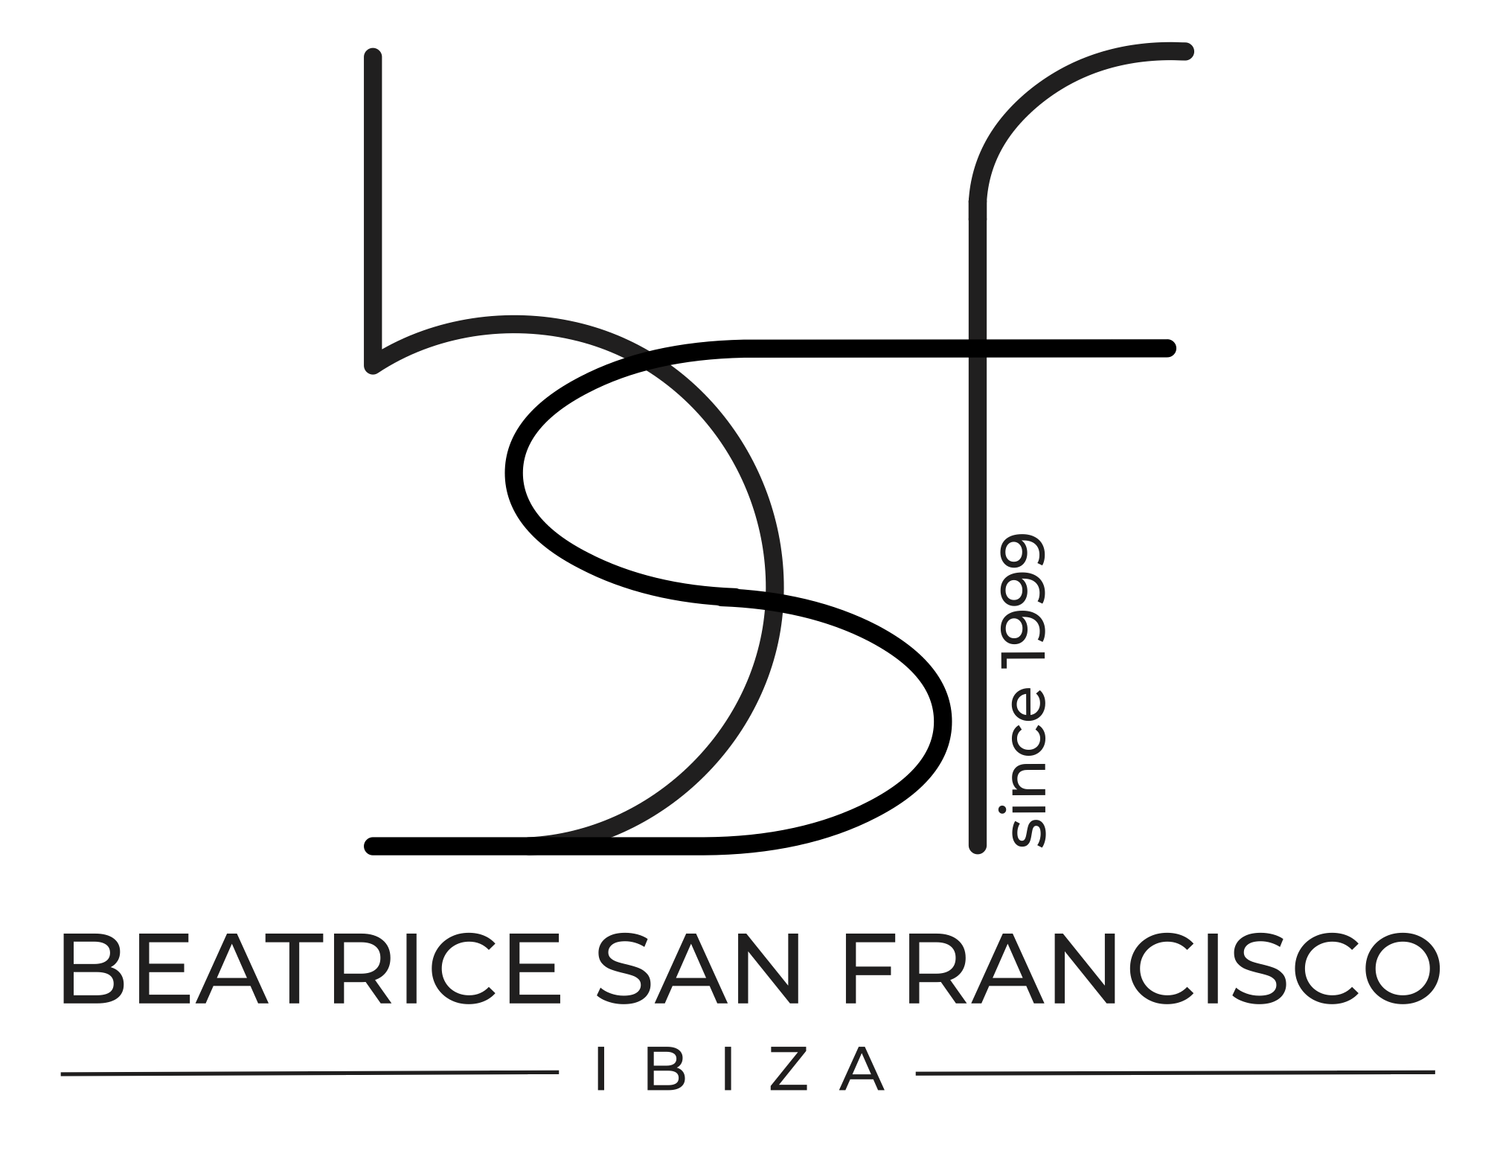 Beatrice San Francisco